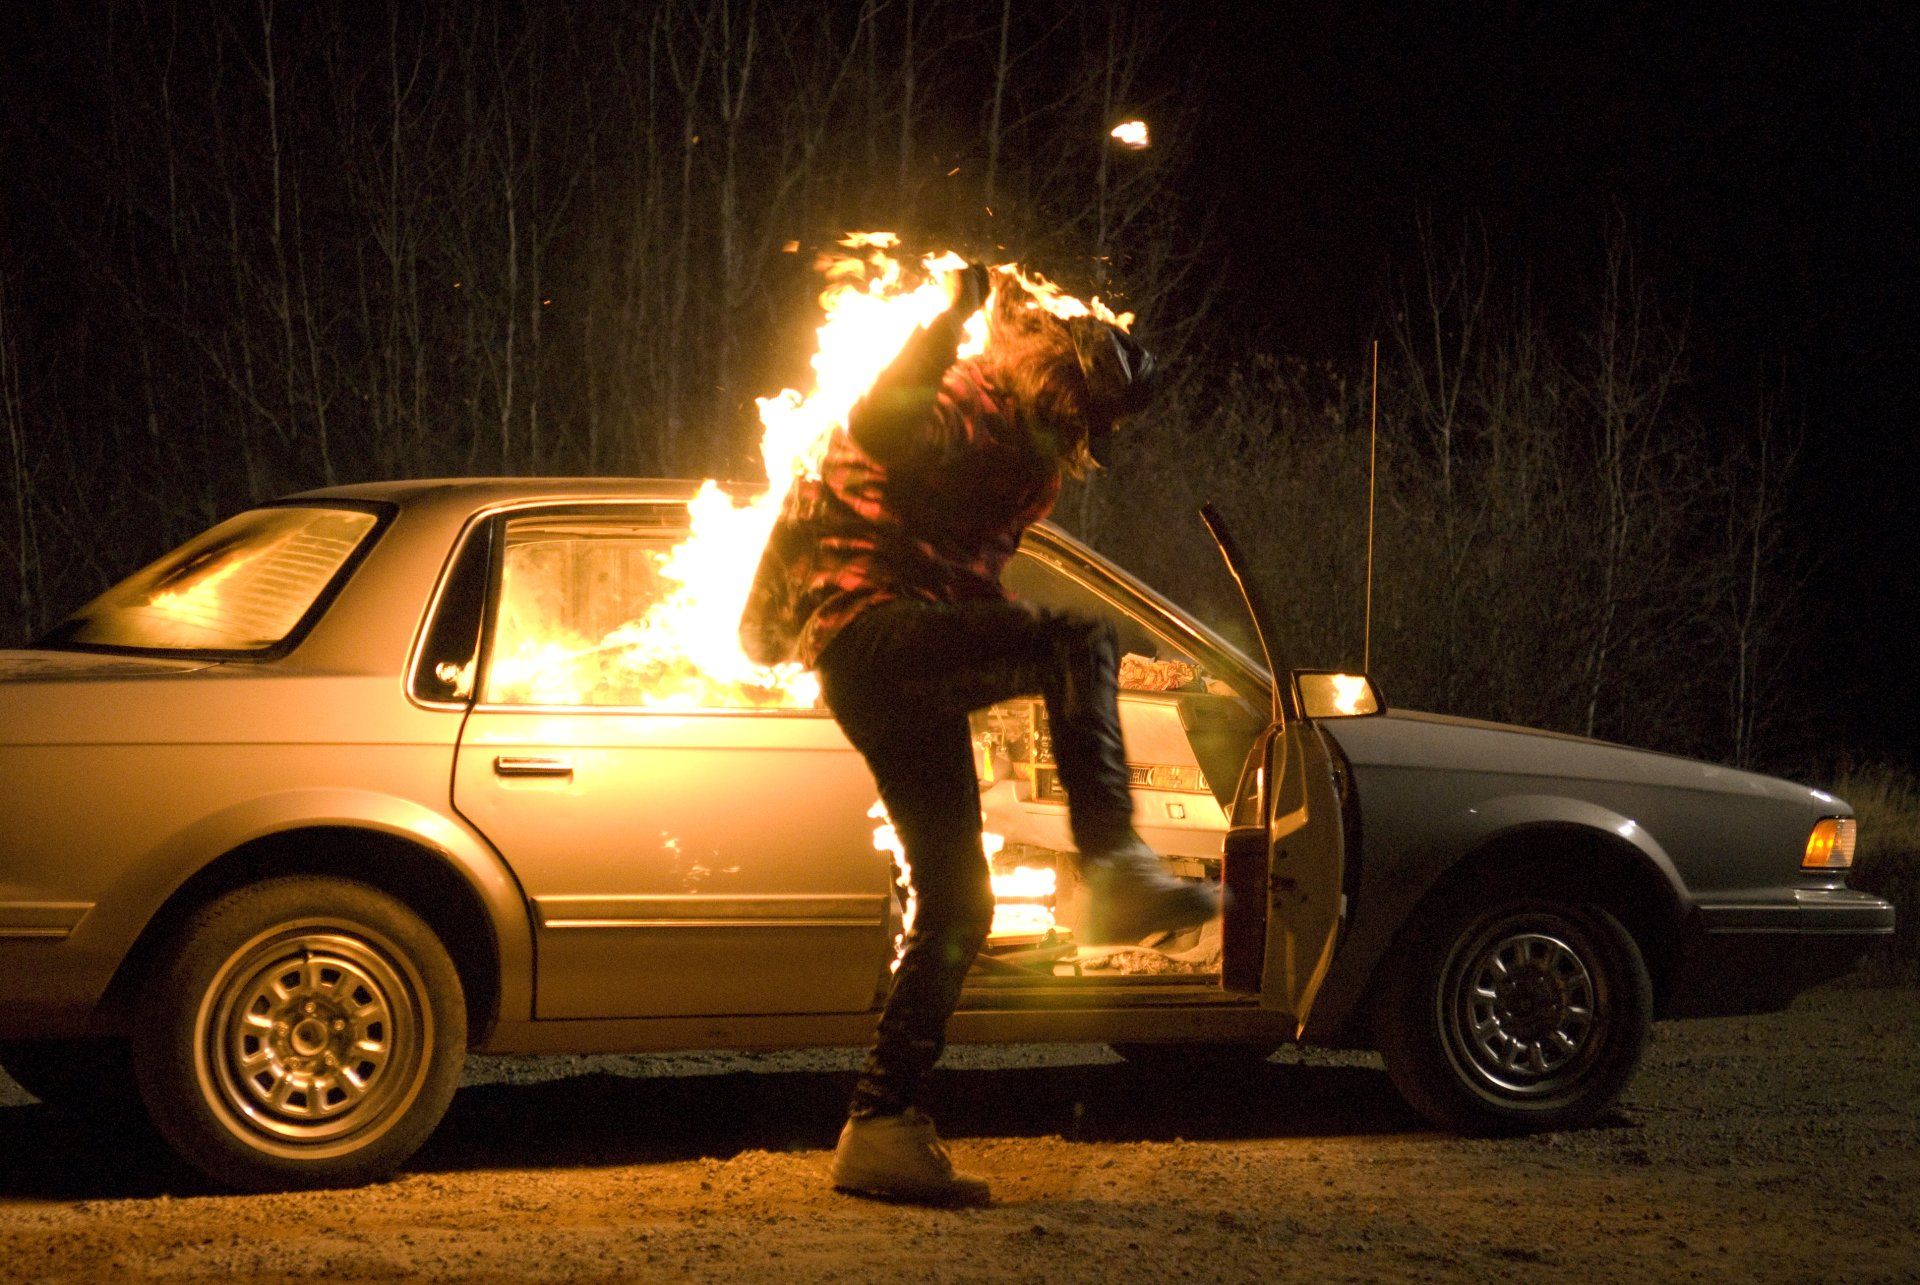 Film Bridge International Presents Freezer Burn: The Invasion of Laxdale